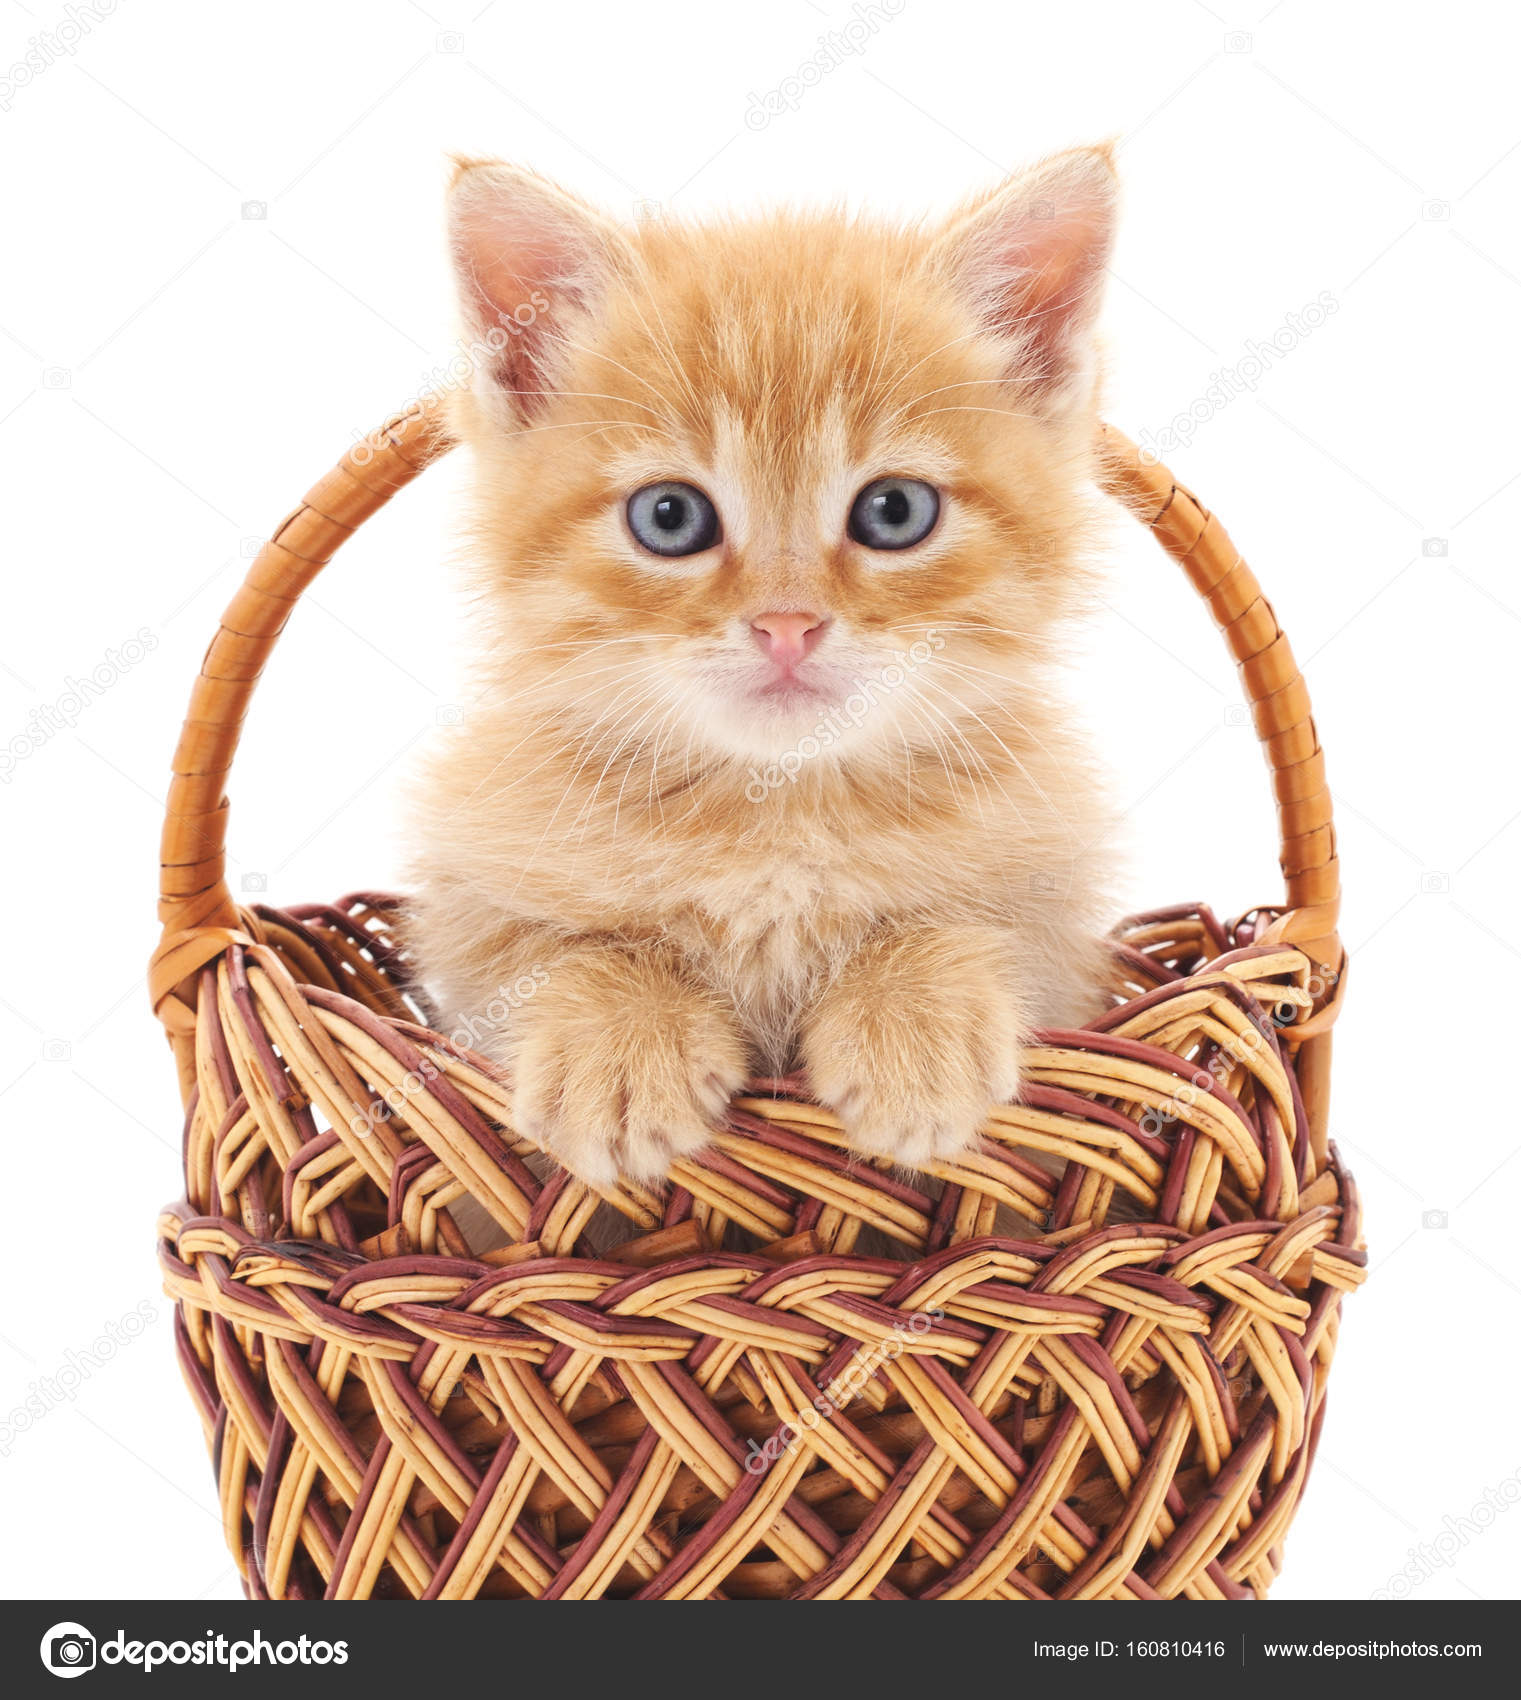 Little kitten in the basket. — Stock Photo © Voren1 #160810416